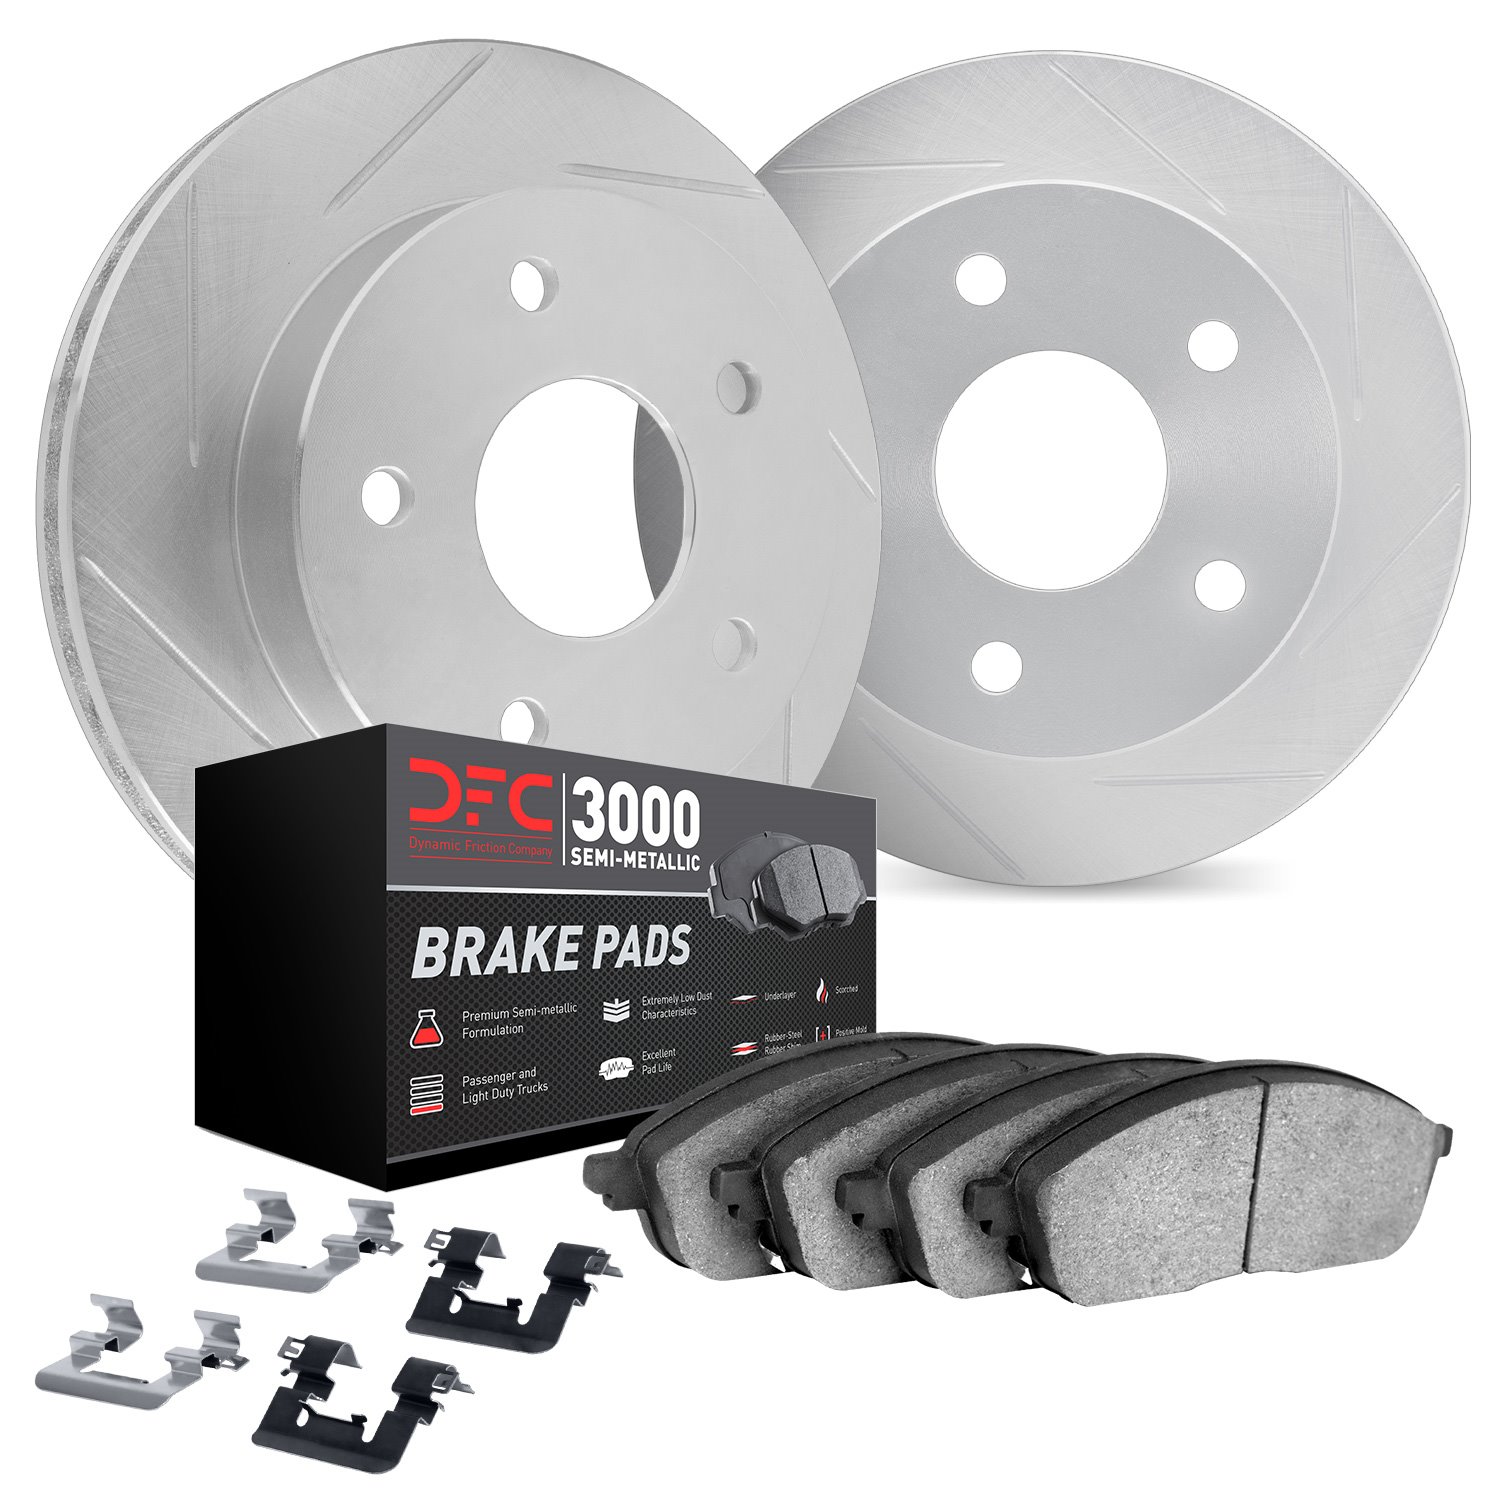 5112-27053 Slotted Brake Rotors with 3000-Series Semi-Metallic Brake Pads Kit & Hardware [Silver], 2003-2014 Volvo, Position: Re